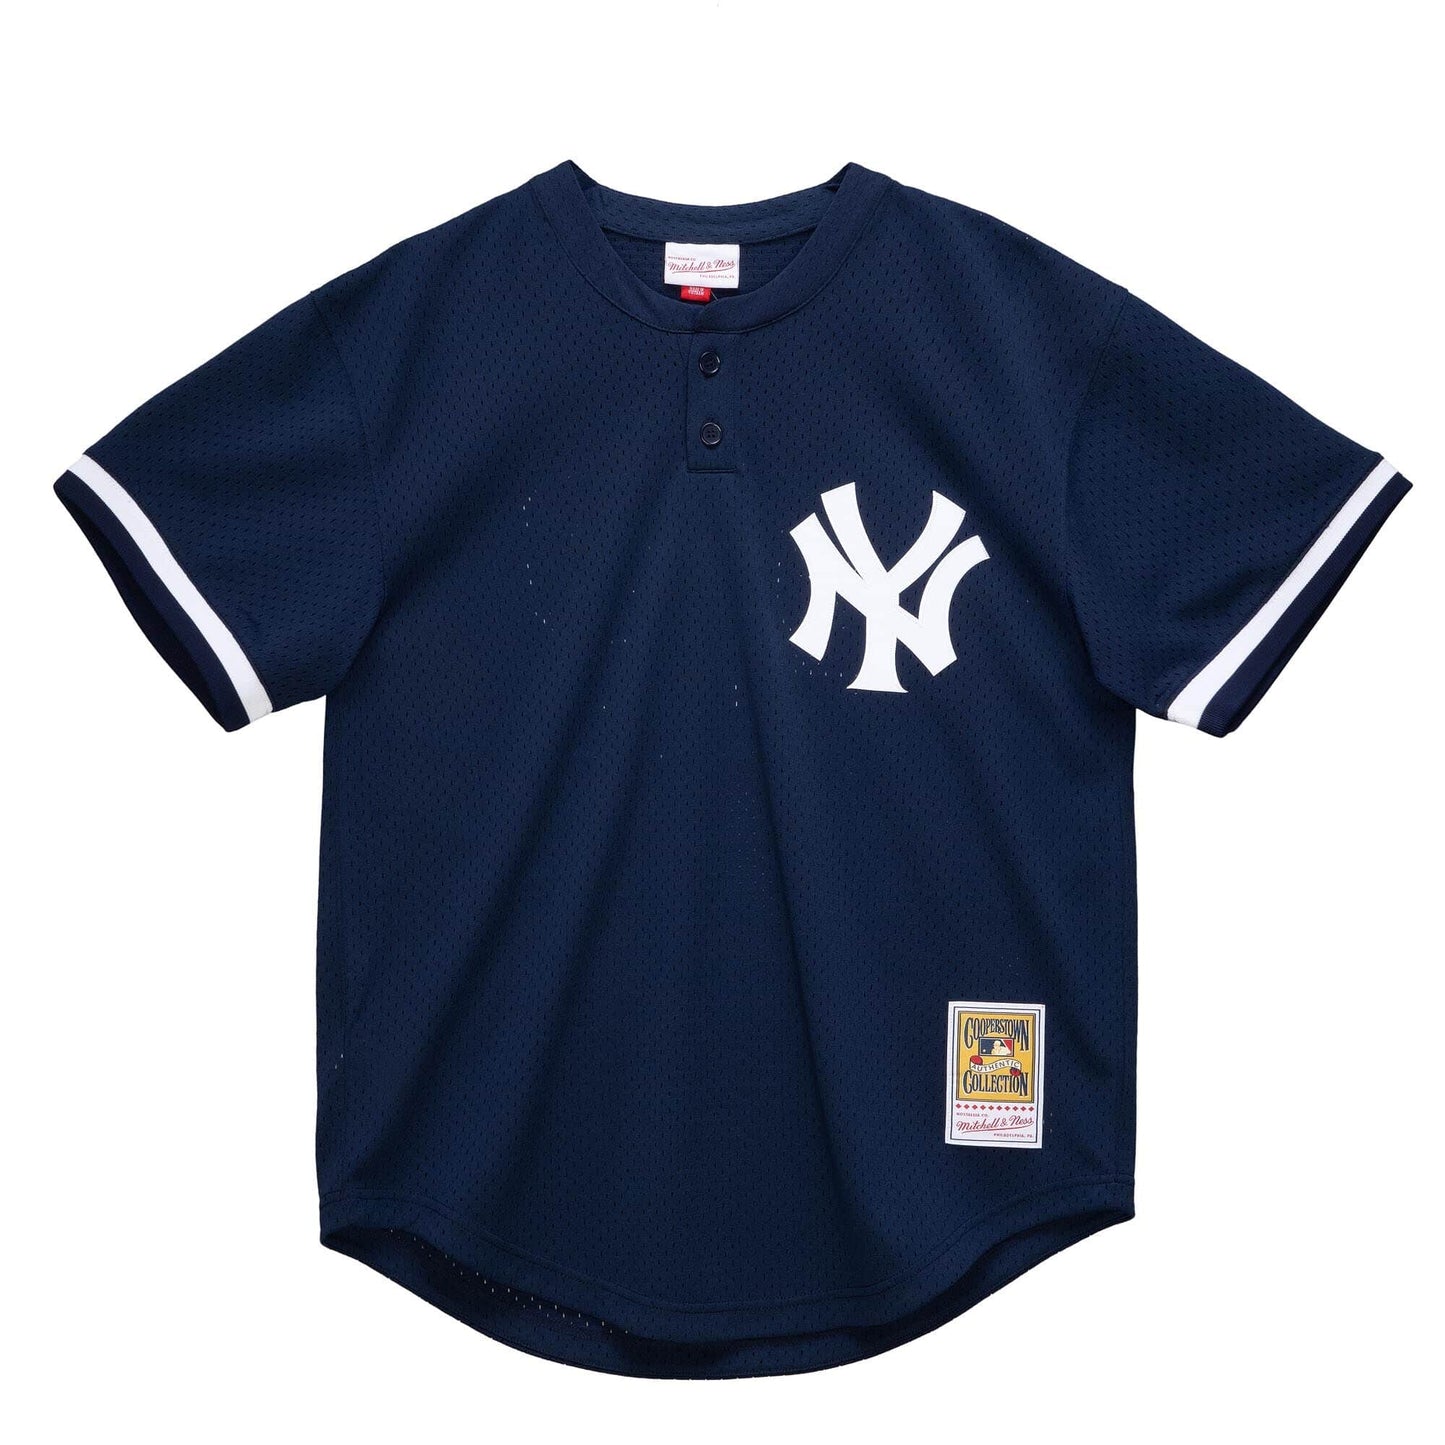 Authentic Derek Jeter New York Yankees 1995 Pullover Jersey